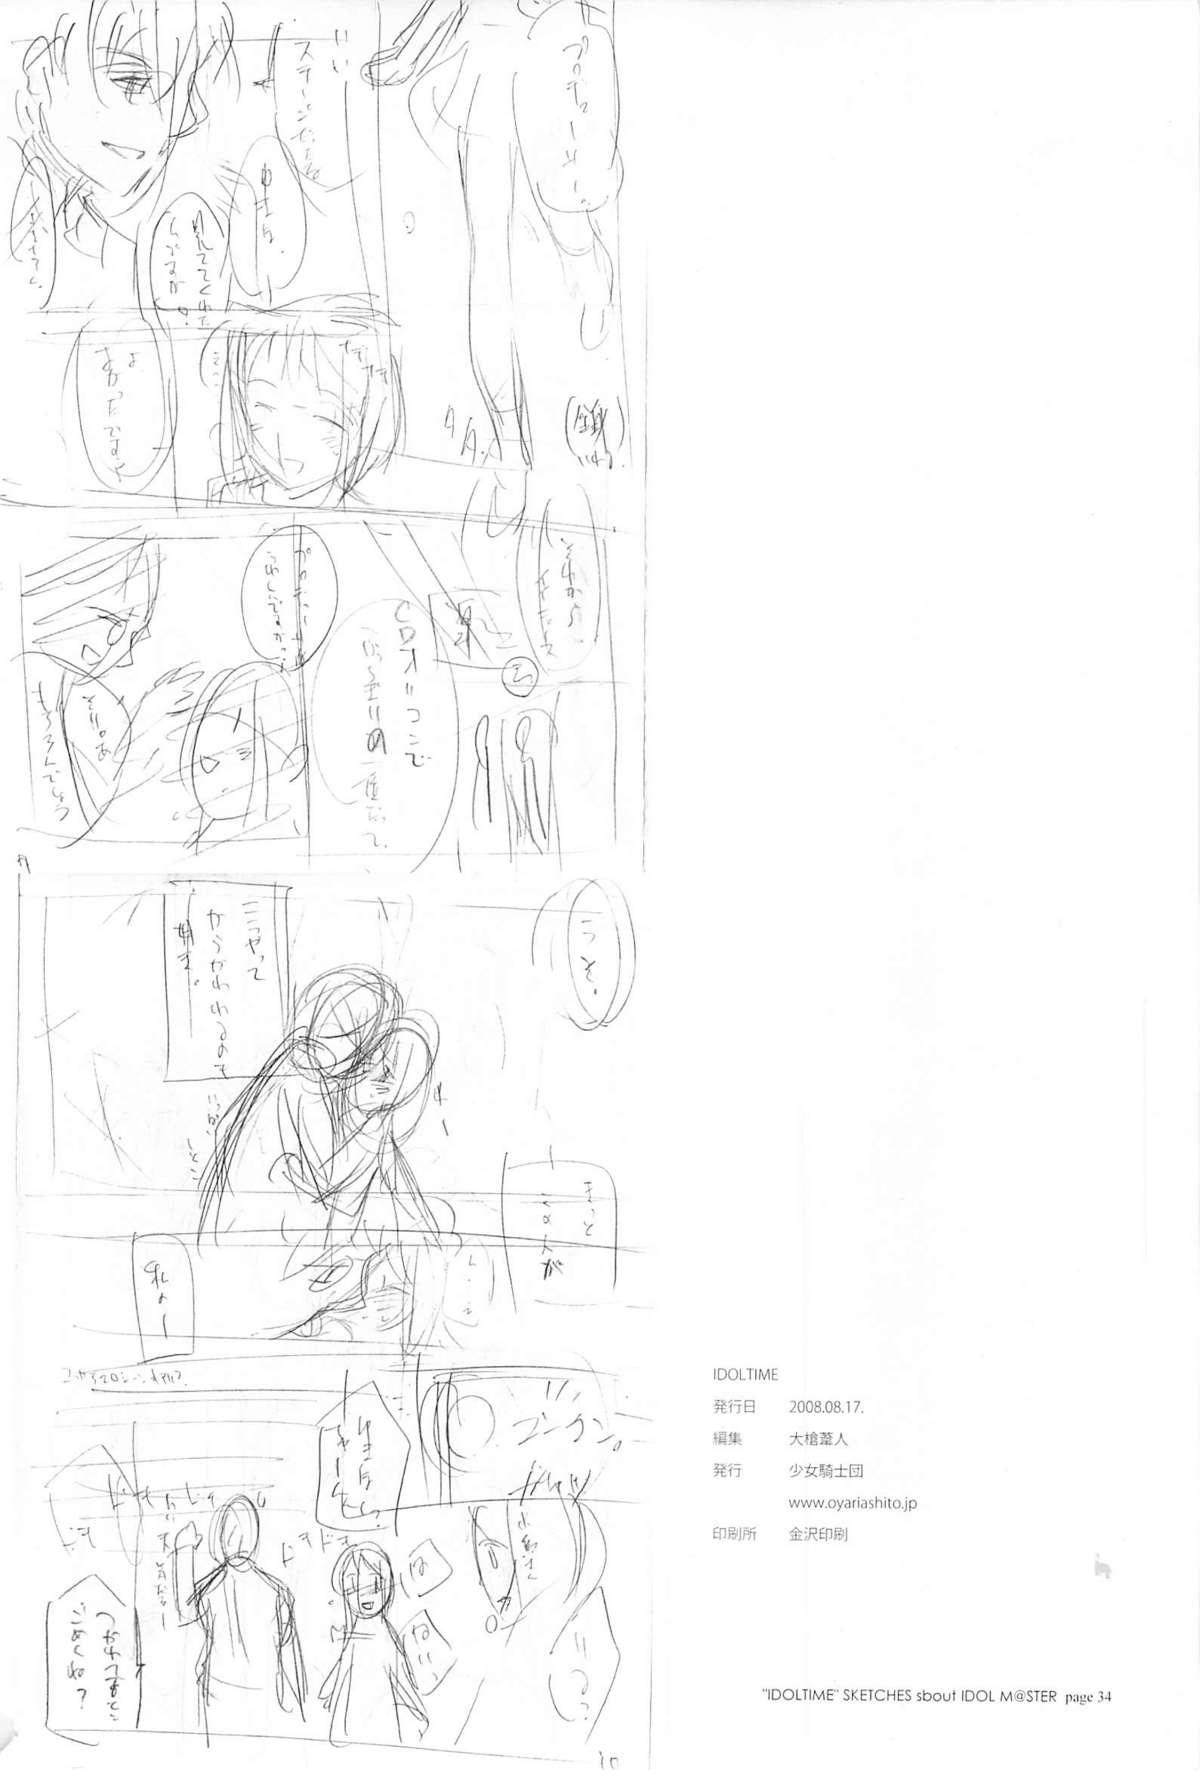 Throat Fuck IDOLTIME featuring YUKIHO HAGIWARA - The idolmaster Brazzers - Page 33